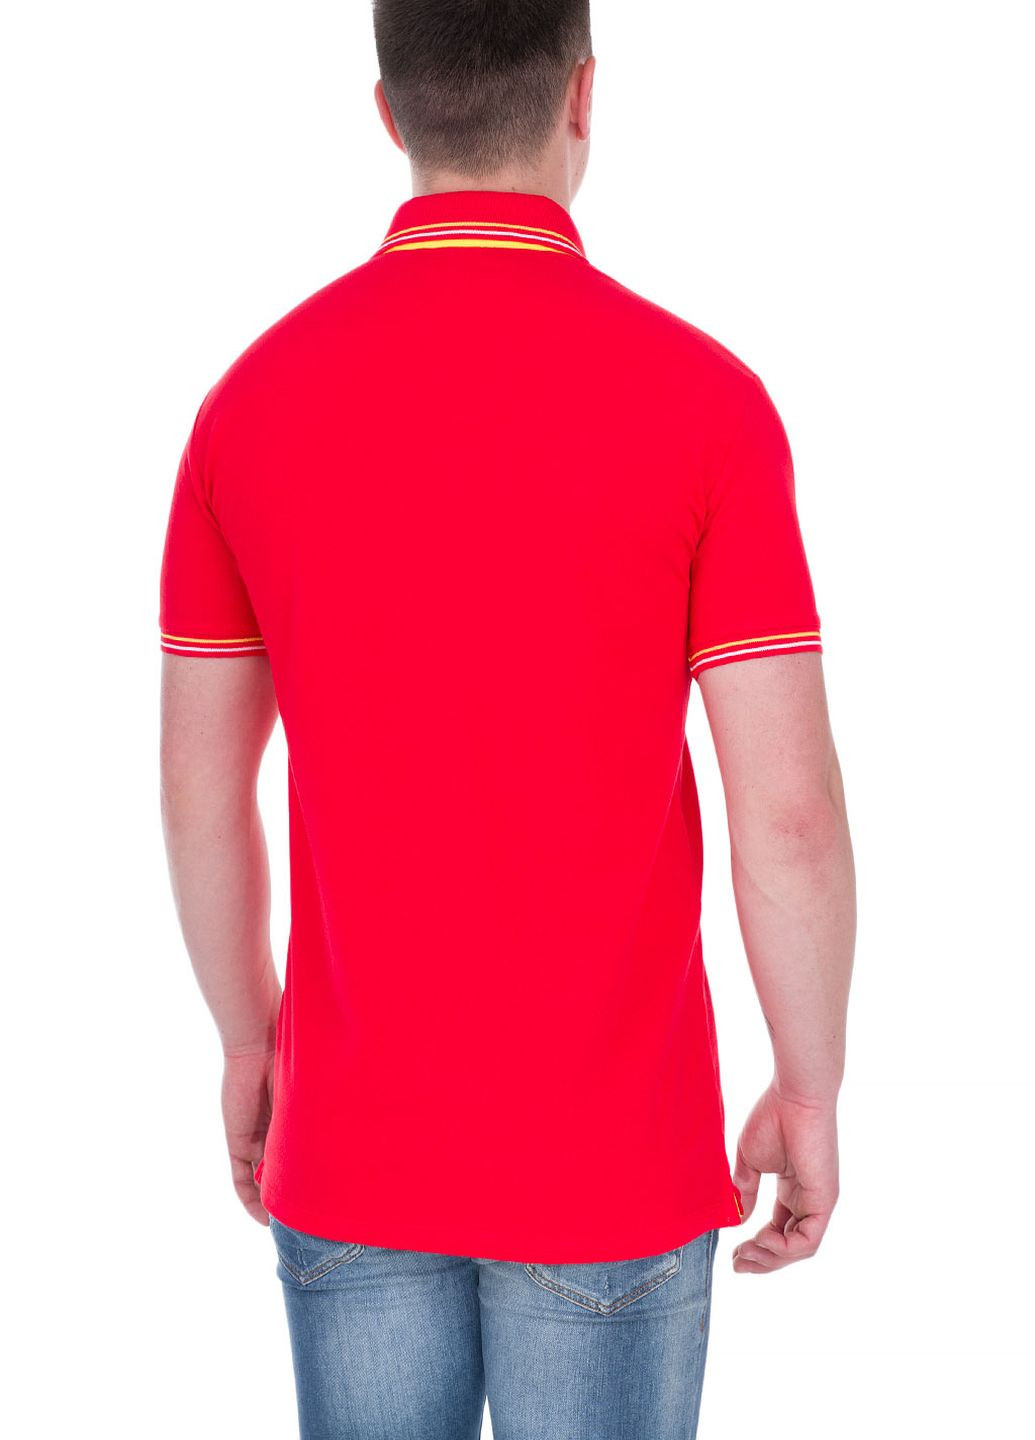 Красная футболка-поло для мужчин Trussardi Jeans однотонная